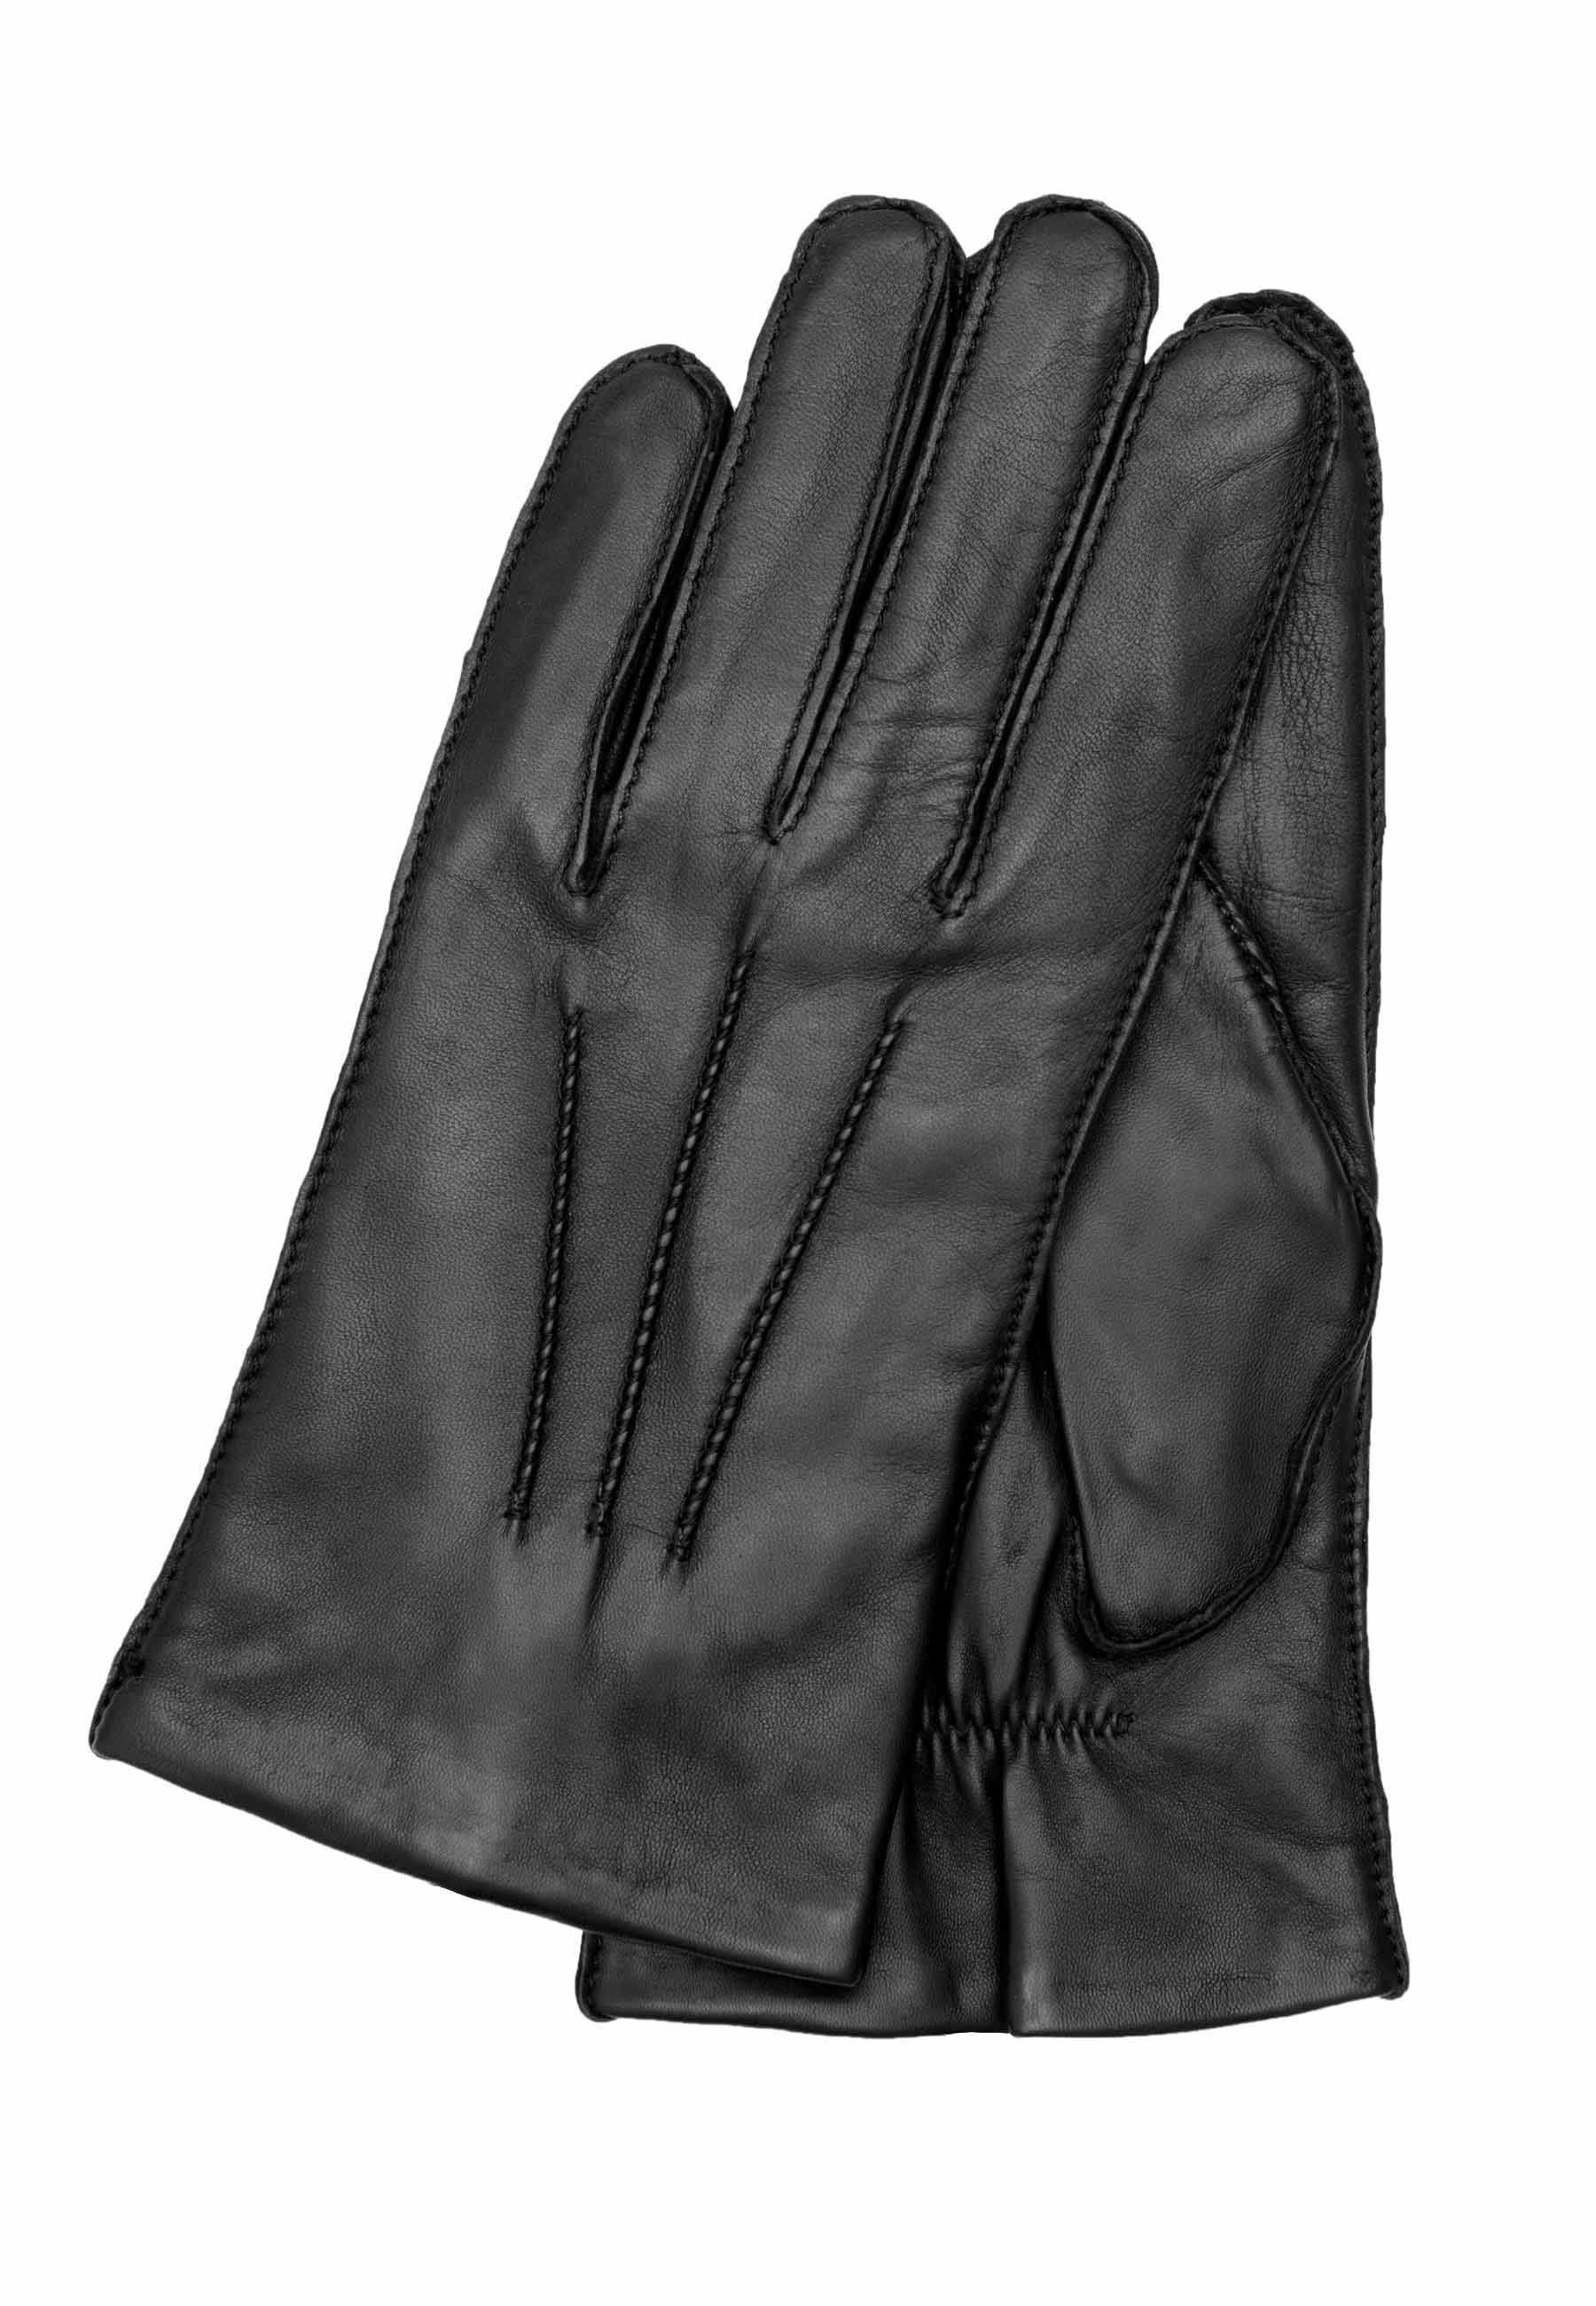 GRETCHEN Lederhandschuhe John aus Lammnappa schwarz | Handschuhe